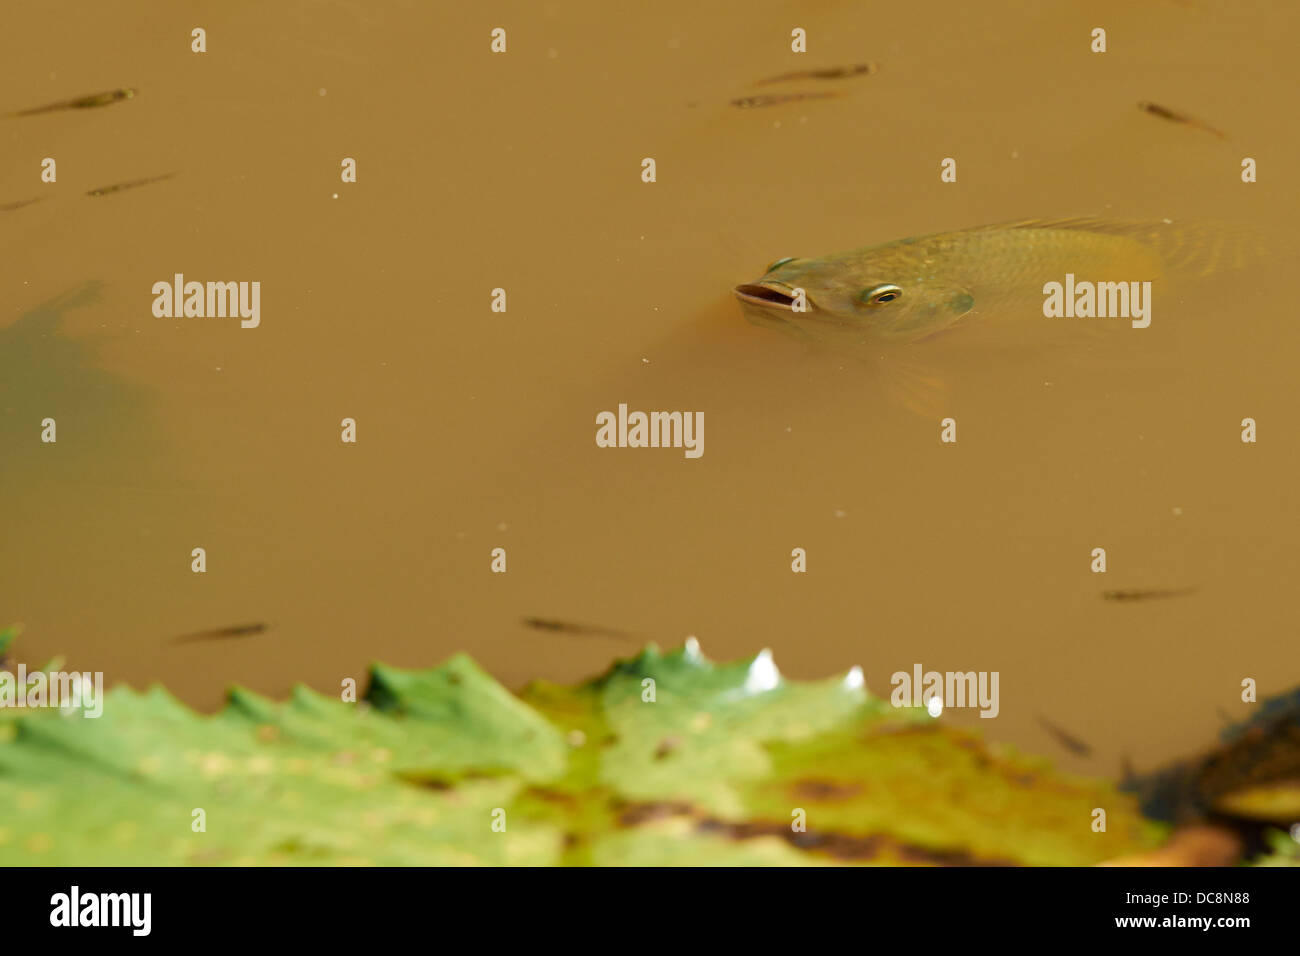 Tilapia fish in muddy water Stock Photo